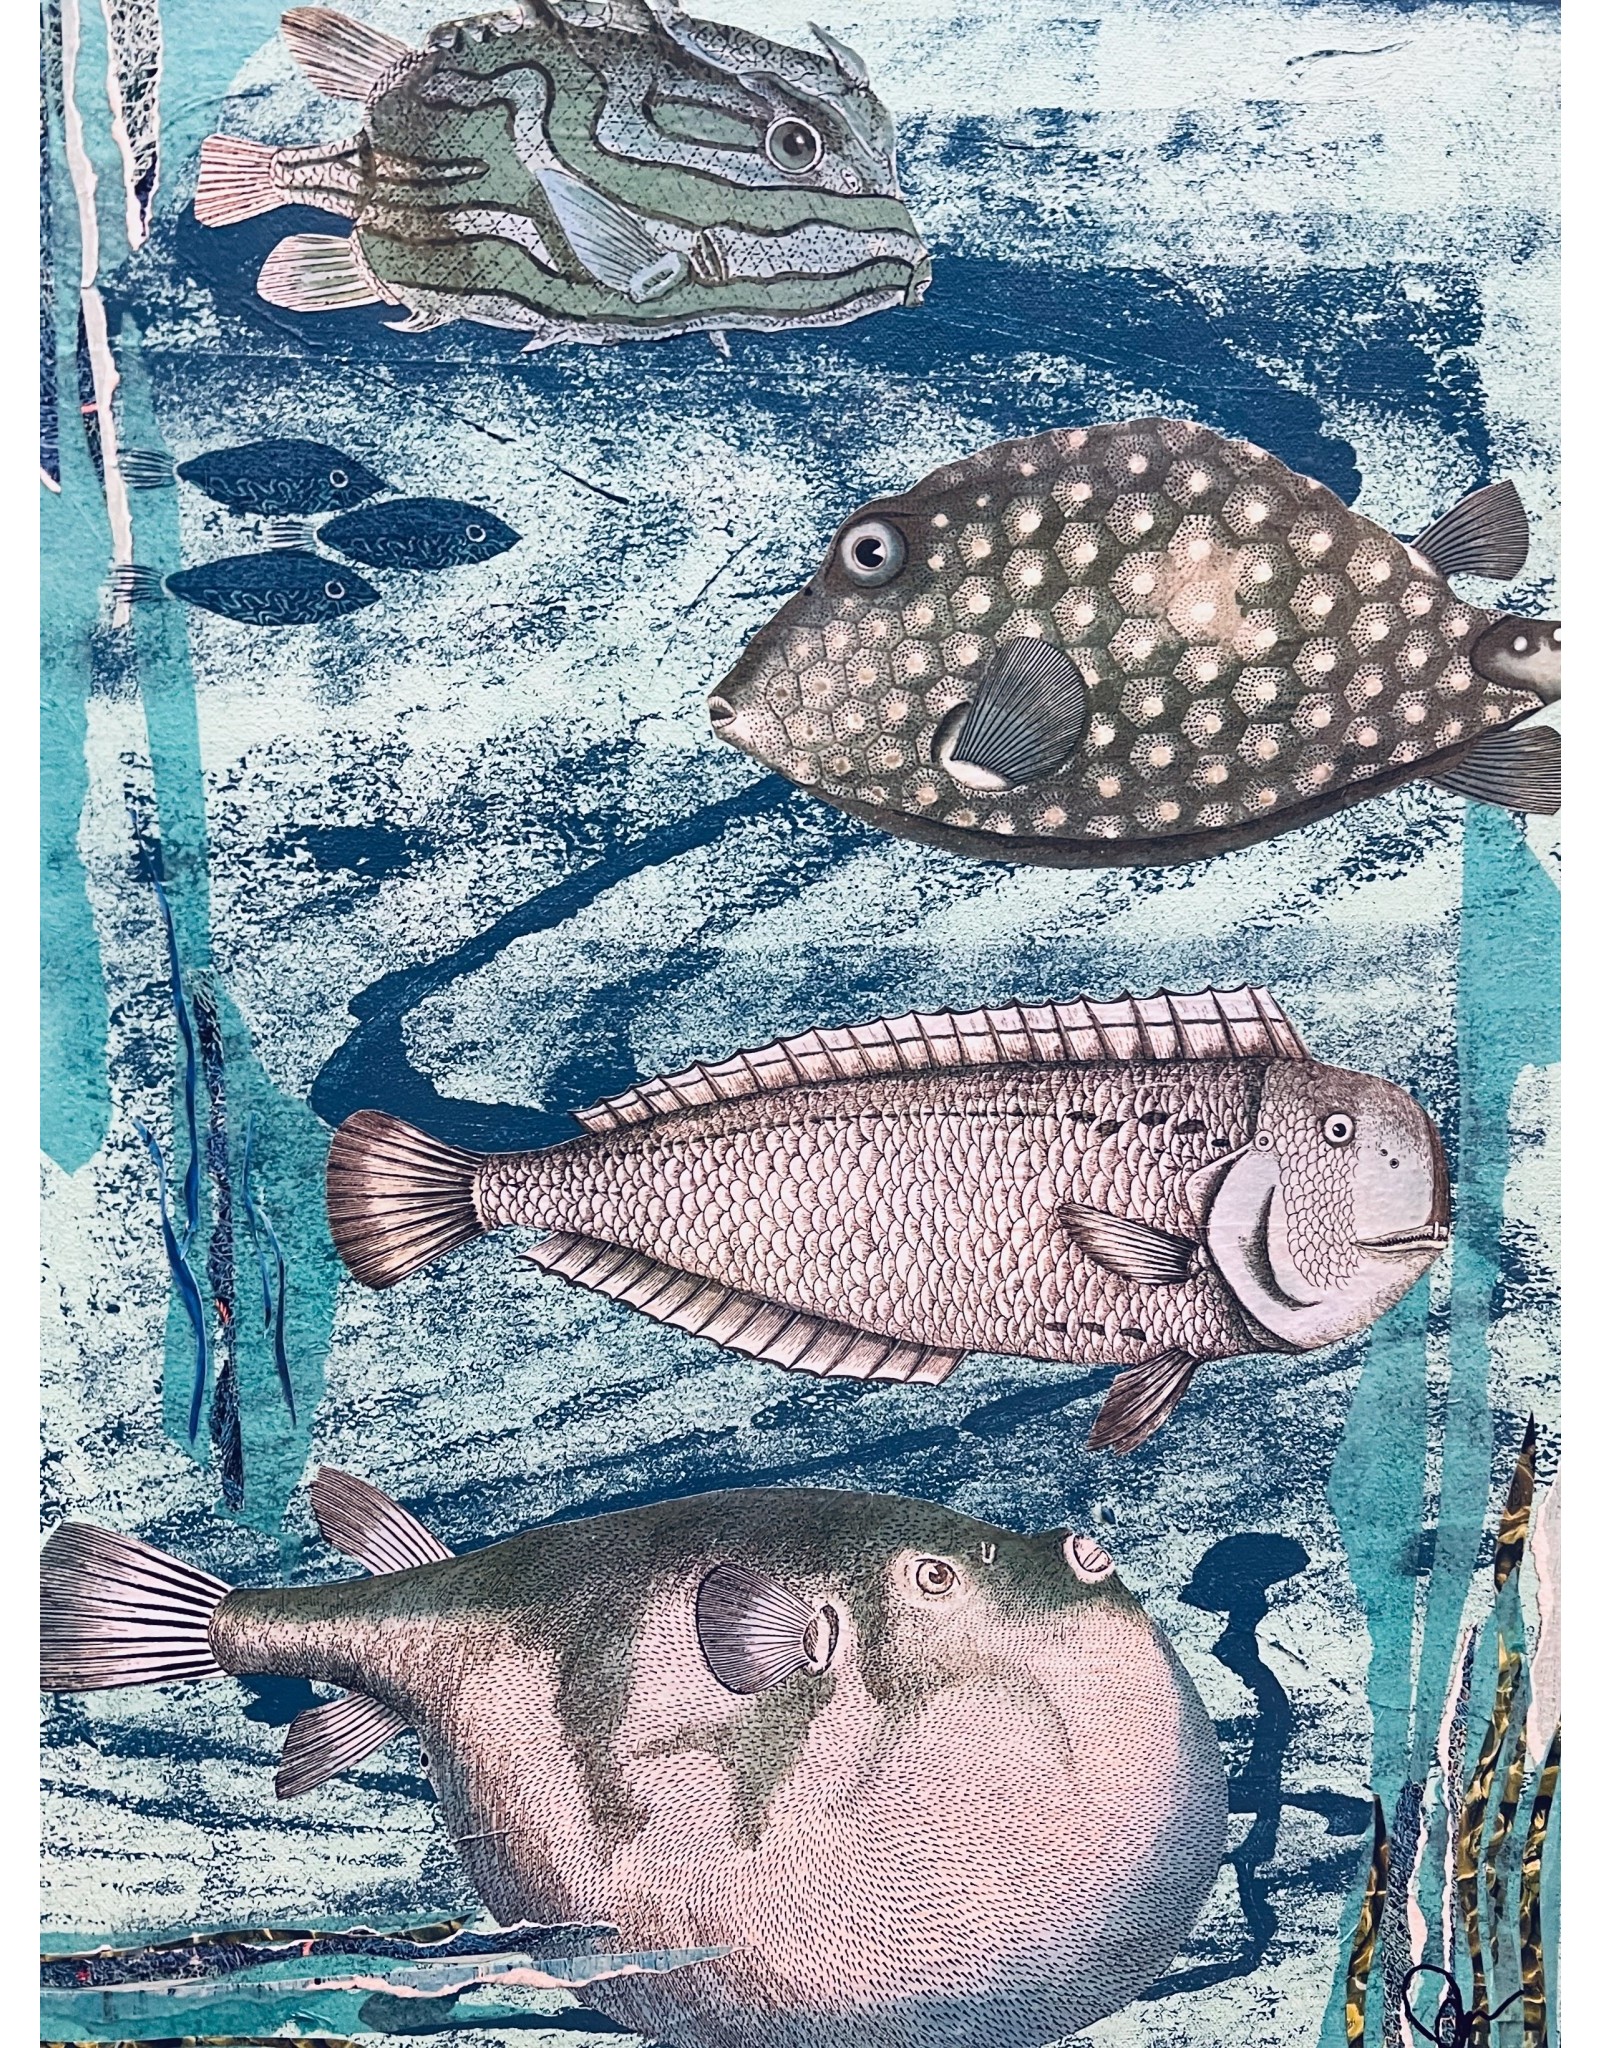 Pam Maschal "Seafoam Fish", collage on canvas, 18x24, PAMM